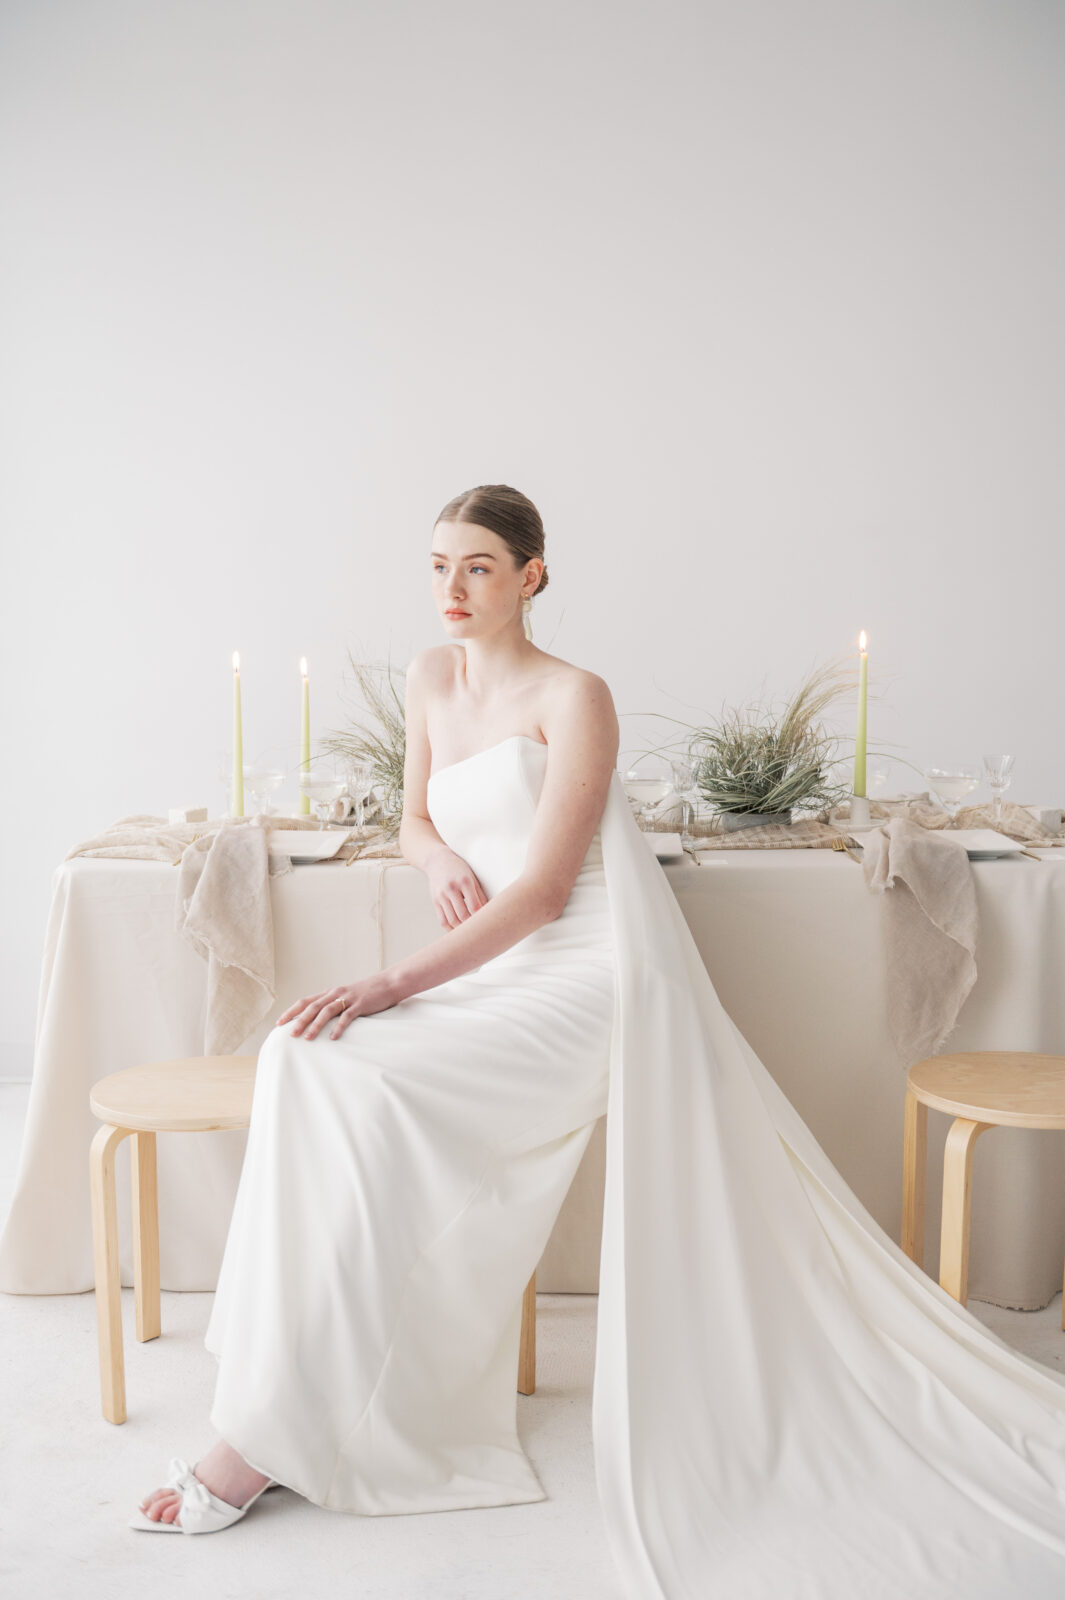 Chic Minimalism meets Grecian Elegance in This Contemporary Wedding Inspiration | Bronte Bride